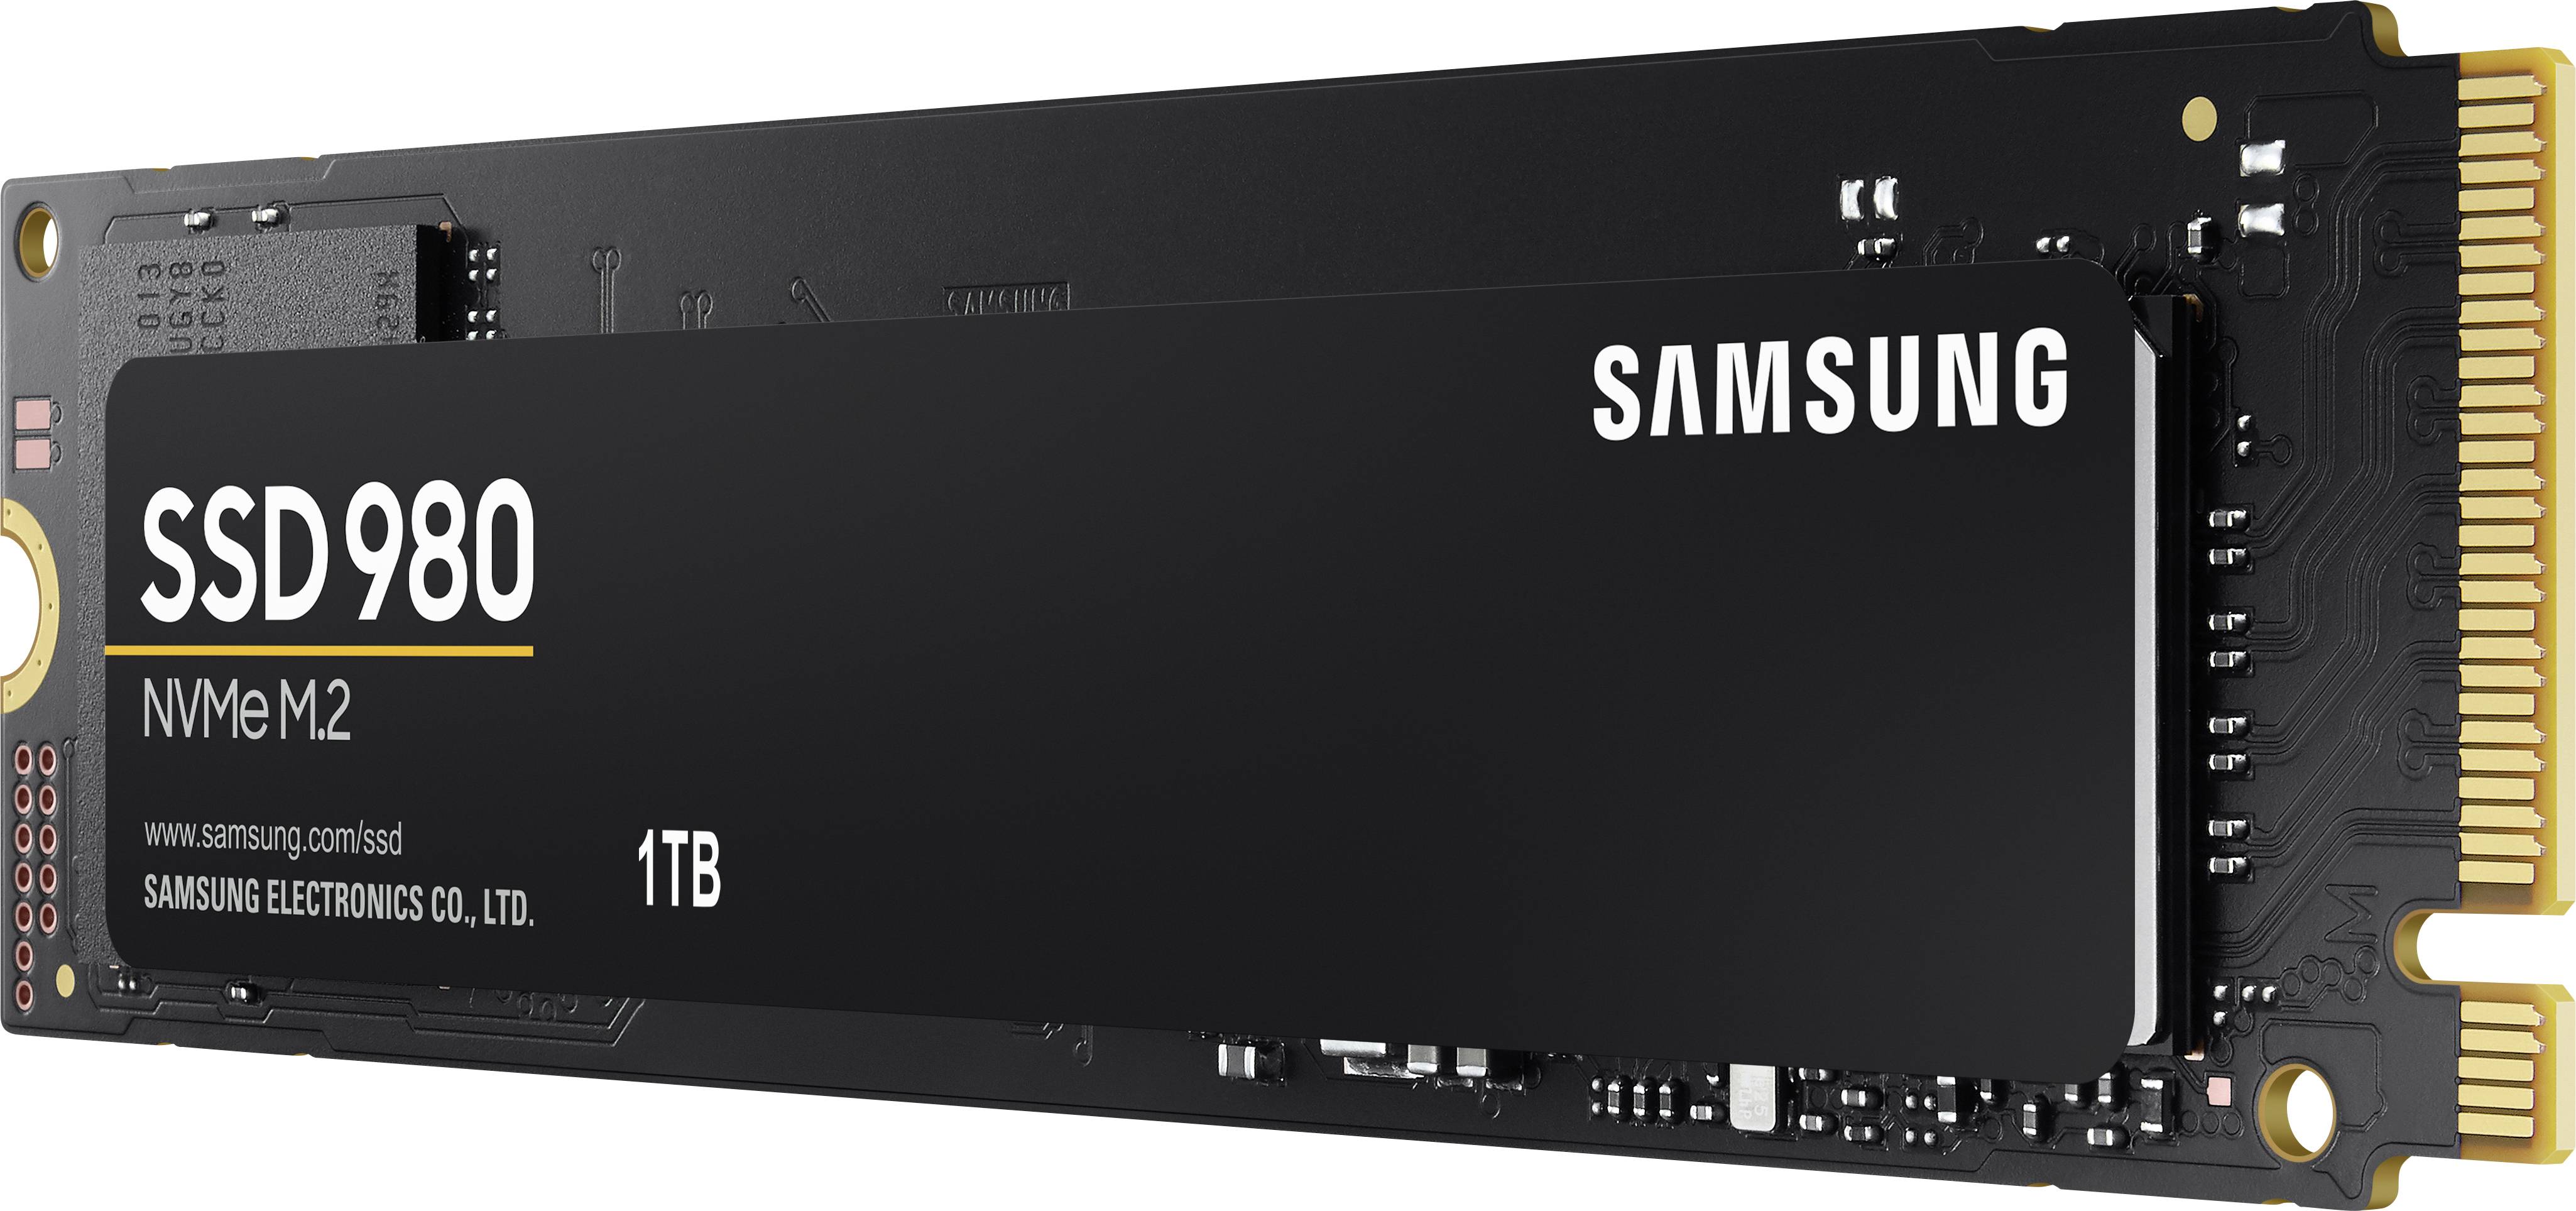 Samsung 980 1 TB NVMe/PCIe M.2 internal SSD M.2 NVMe PCIe 3.0 x4 